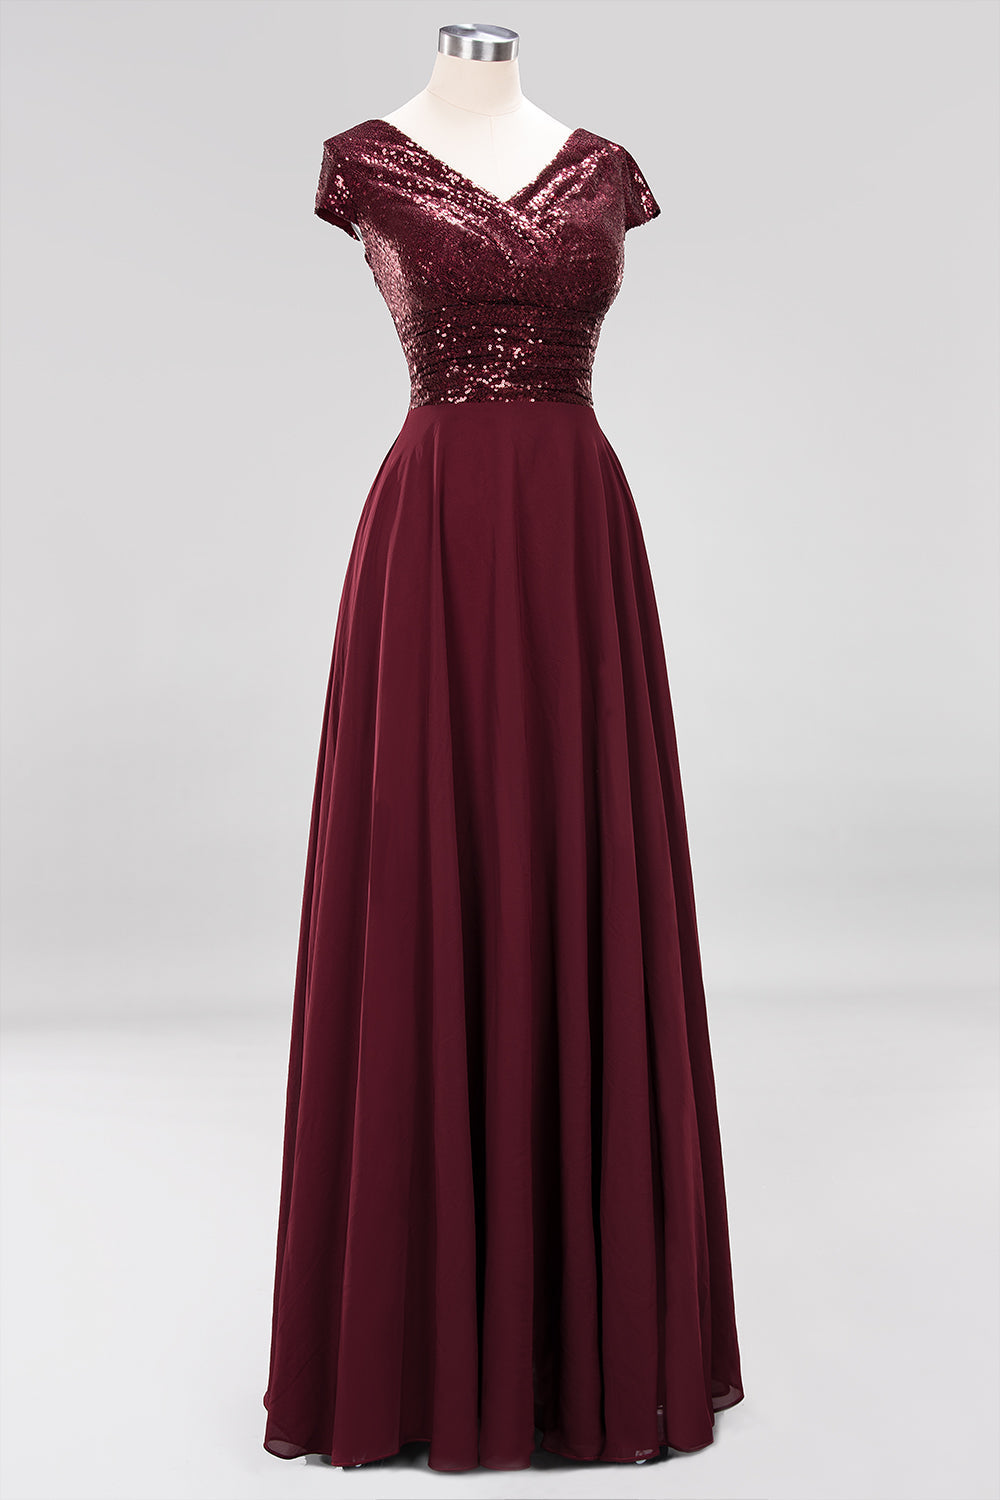 Chic Sequined Top V-Neck Sleeveless Burgundy Bridesmaid Dresses Online-27dress